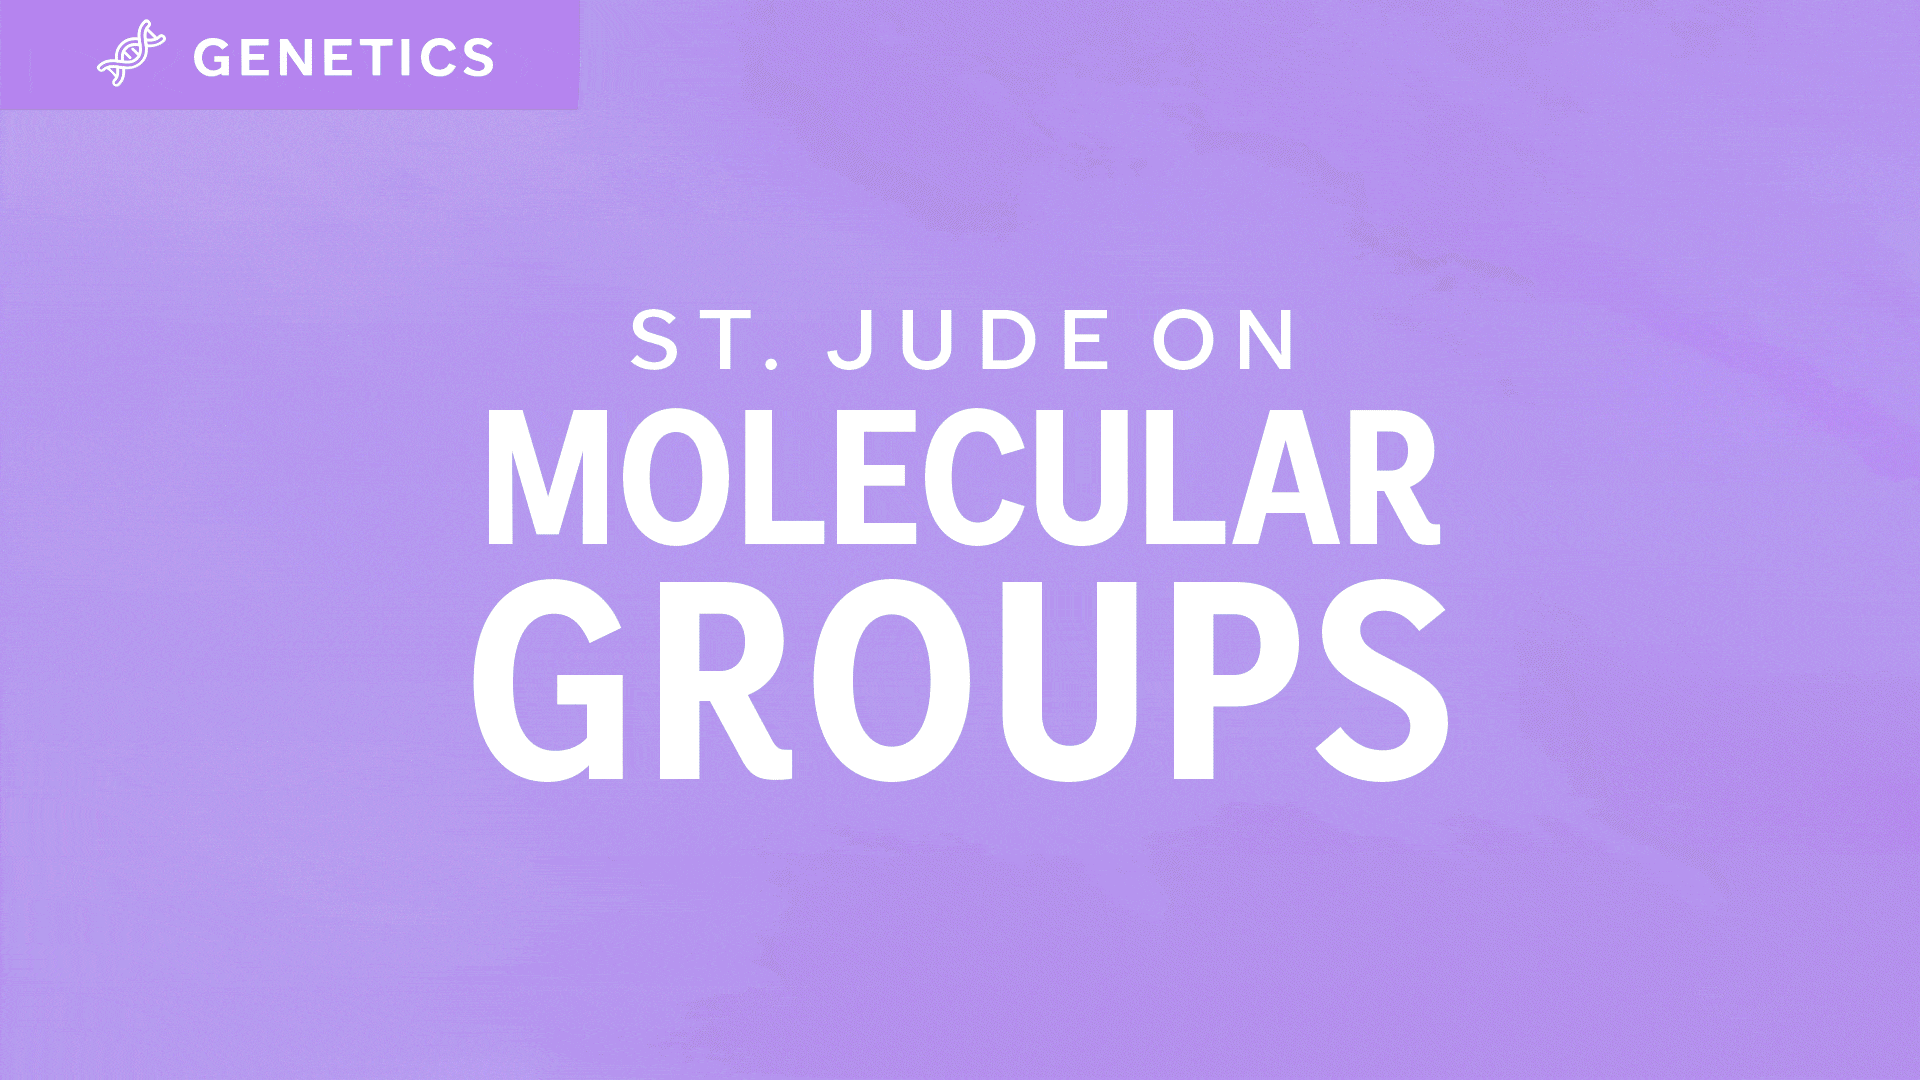 Molecular groups